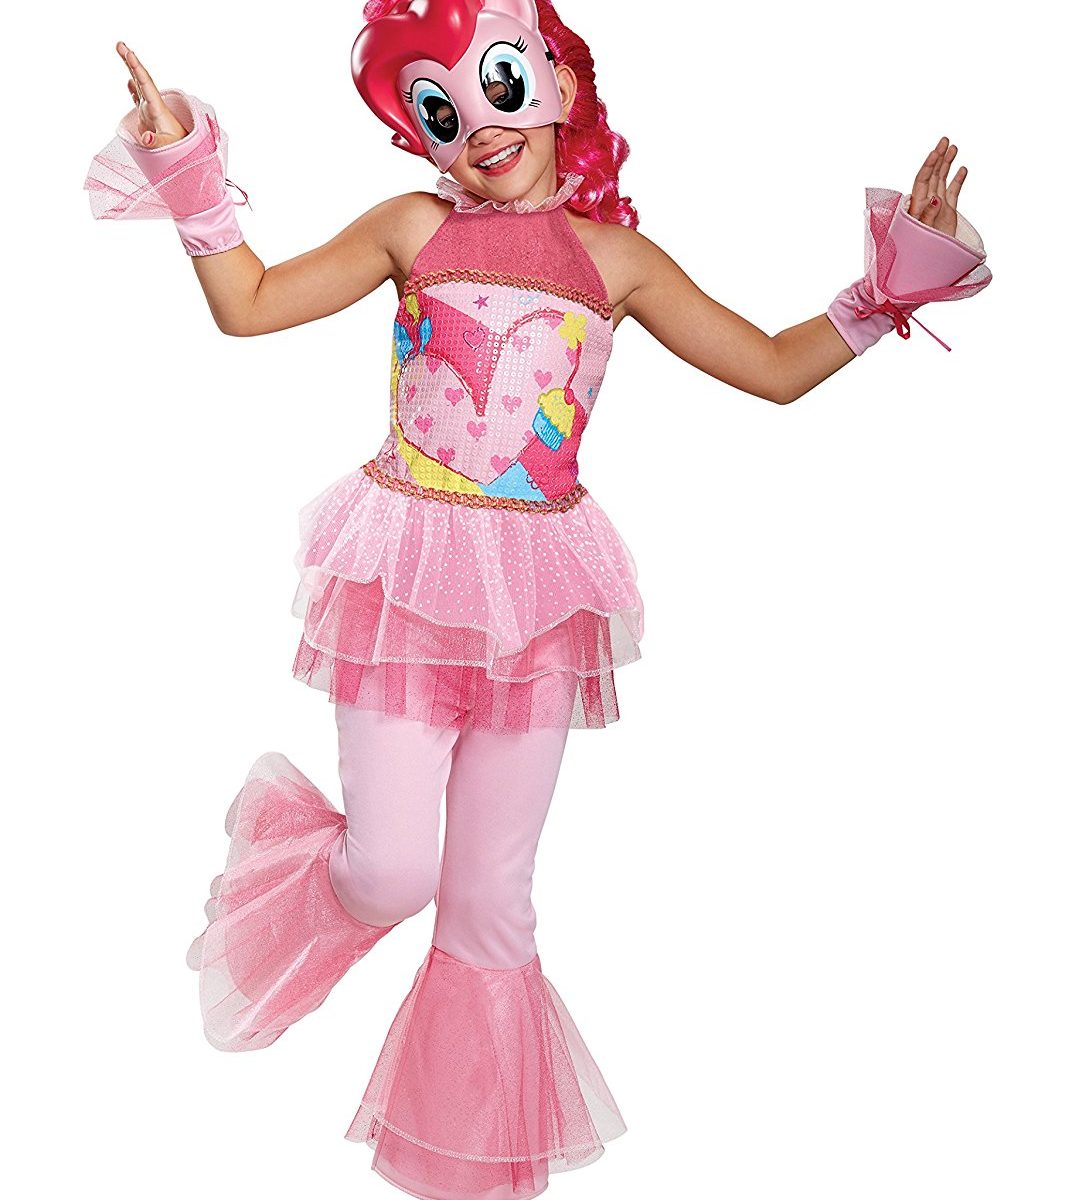 MLP: TM Medium Pinkie Pie Deluxe Costume 1